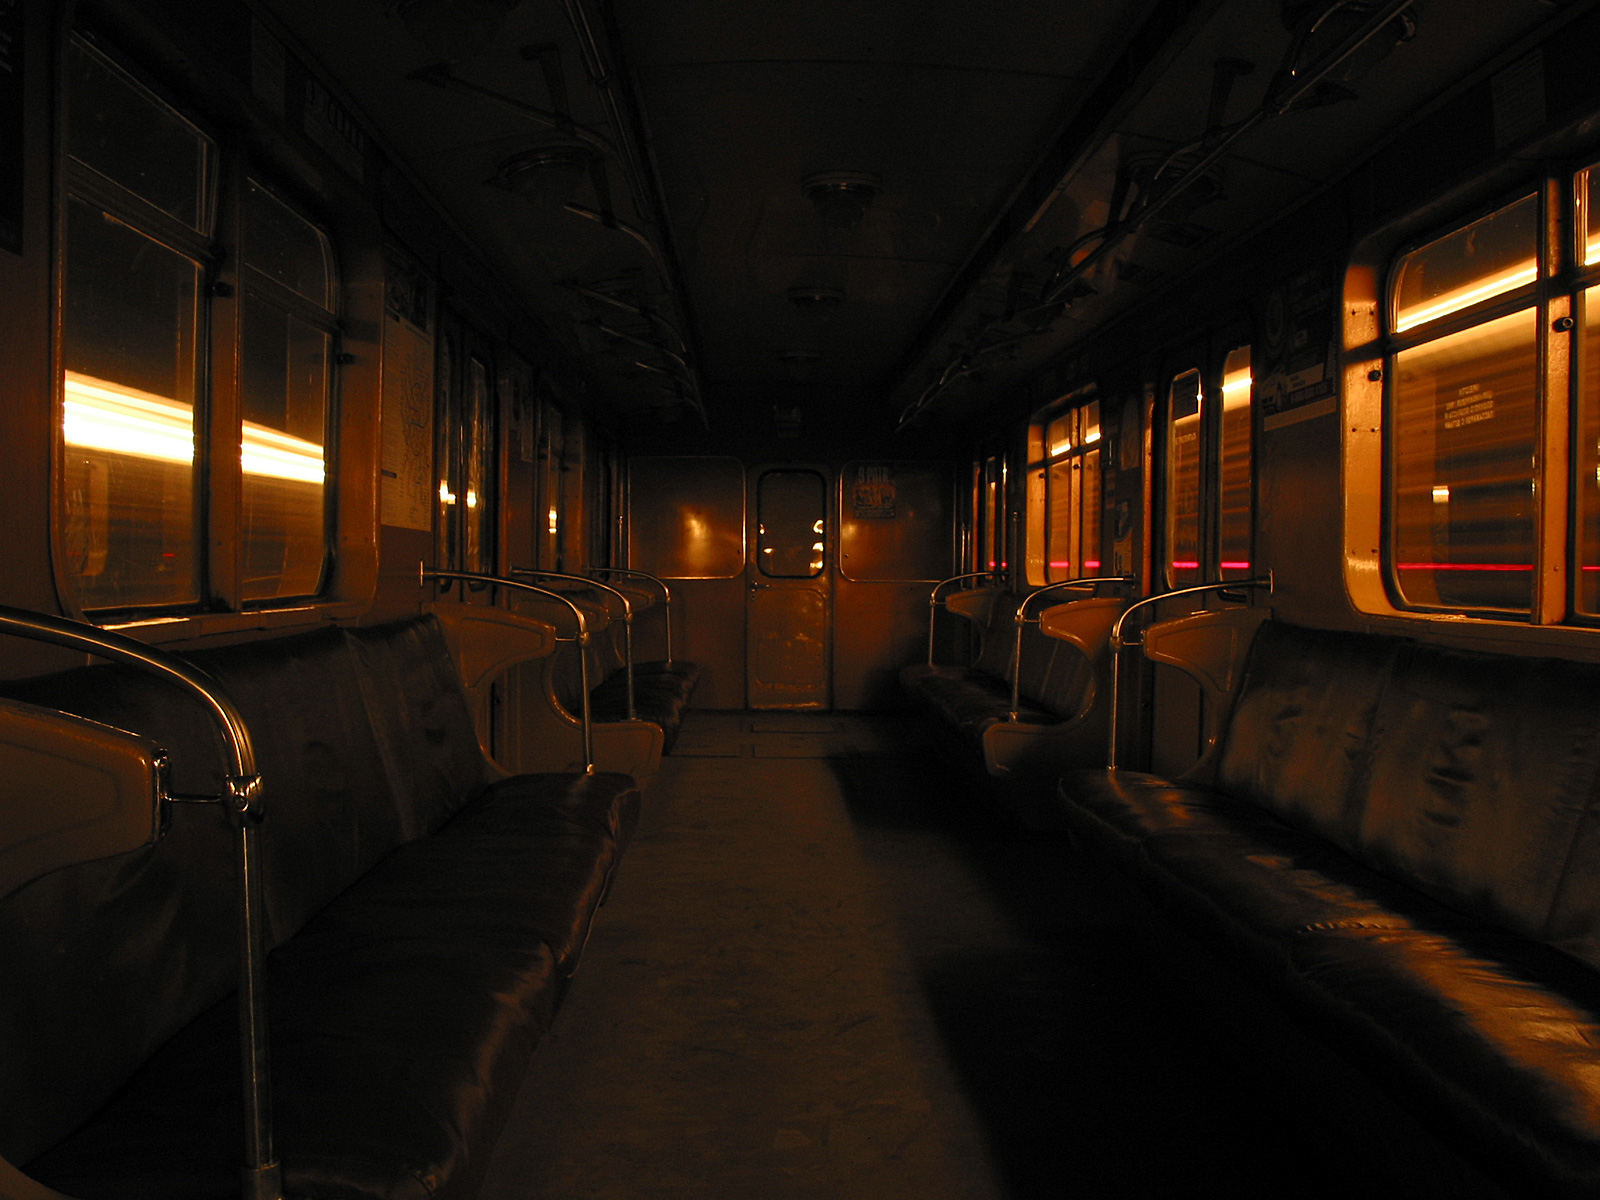 1920x1080 Background train, vehicles, subway